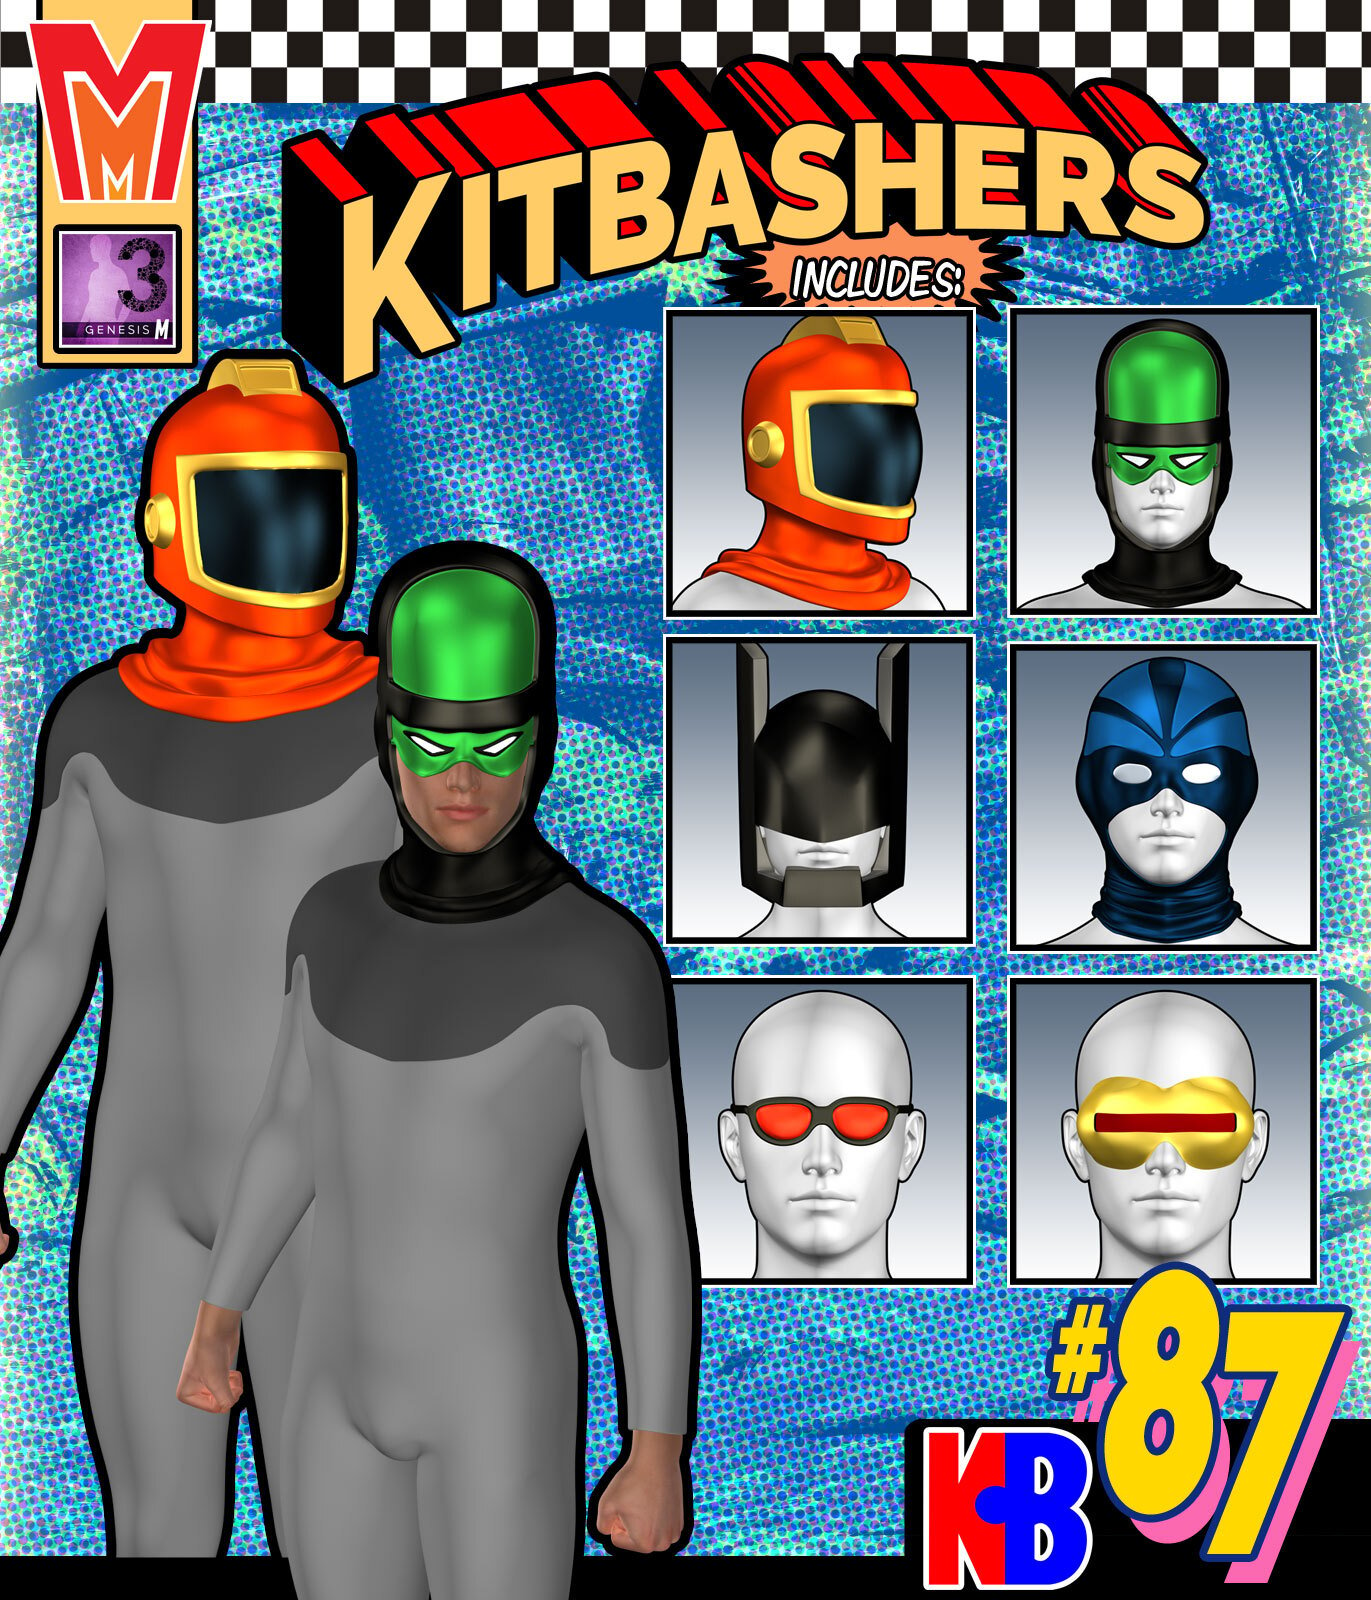 Kitbashers 087 MMG3M by: MightyMite, 3D Models by Daz 3D